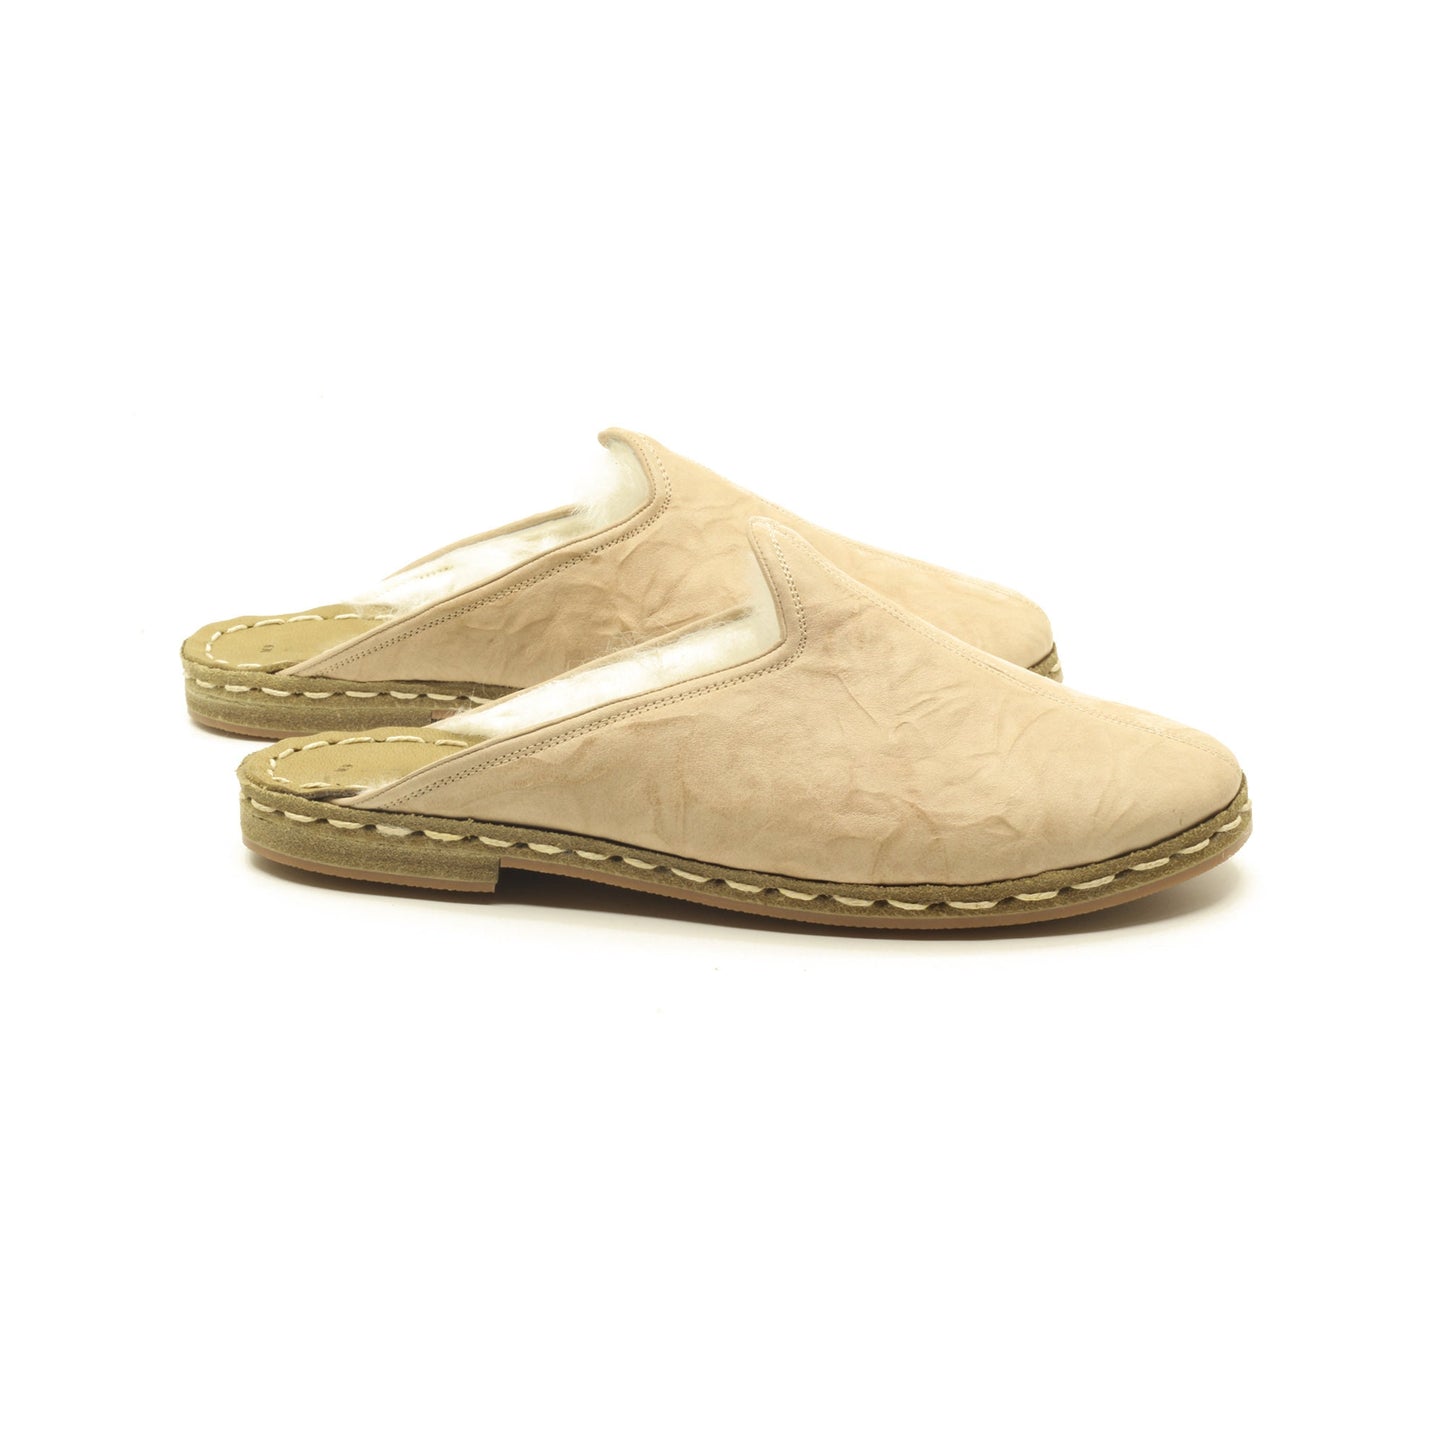 Winter Slippers  - Sheepskin slippers  - Close Toed Slippers - Beige Leather – Rubber Sole - For Women